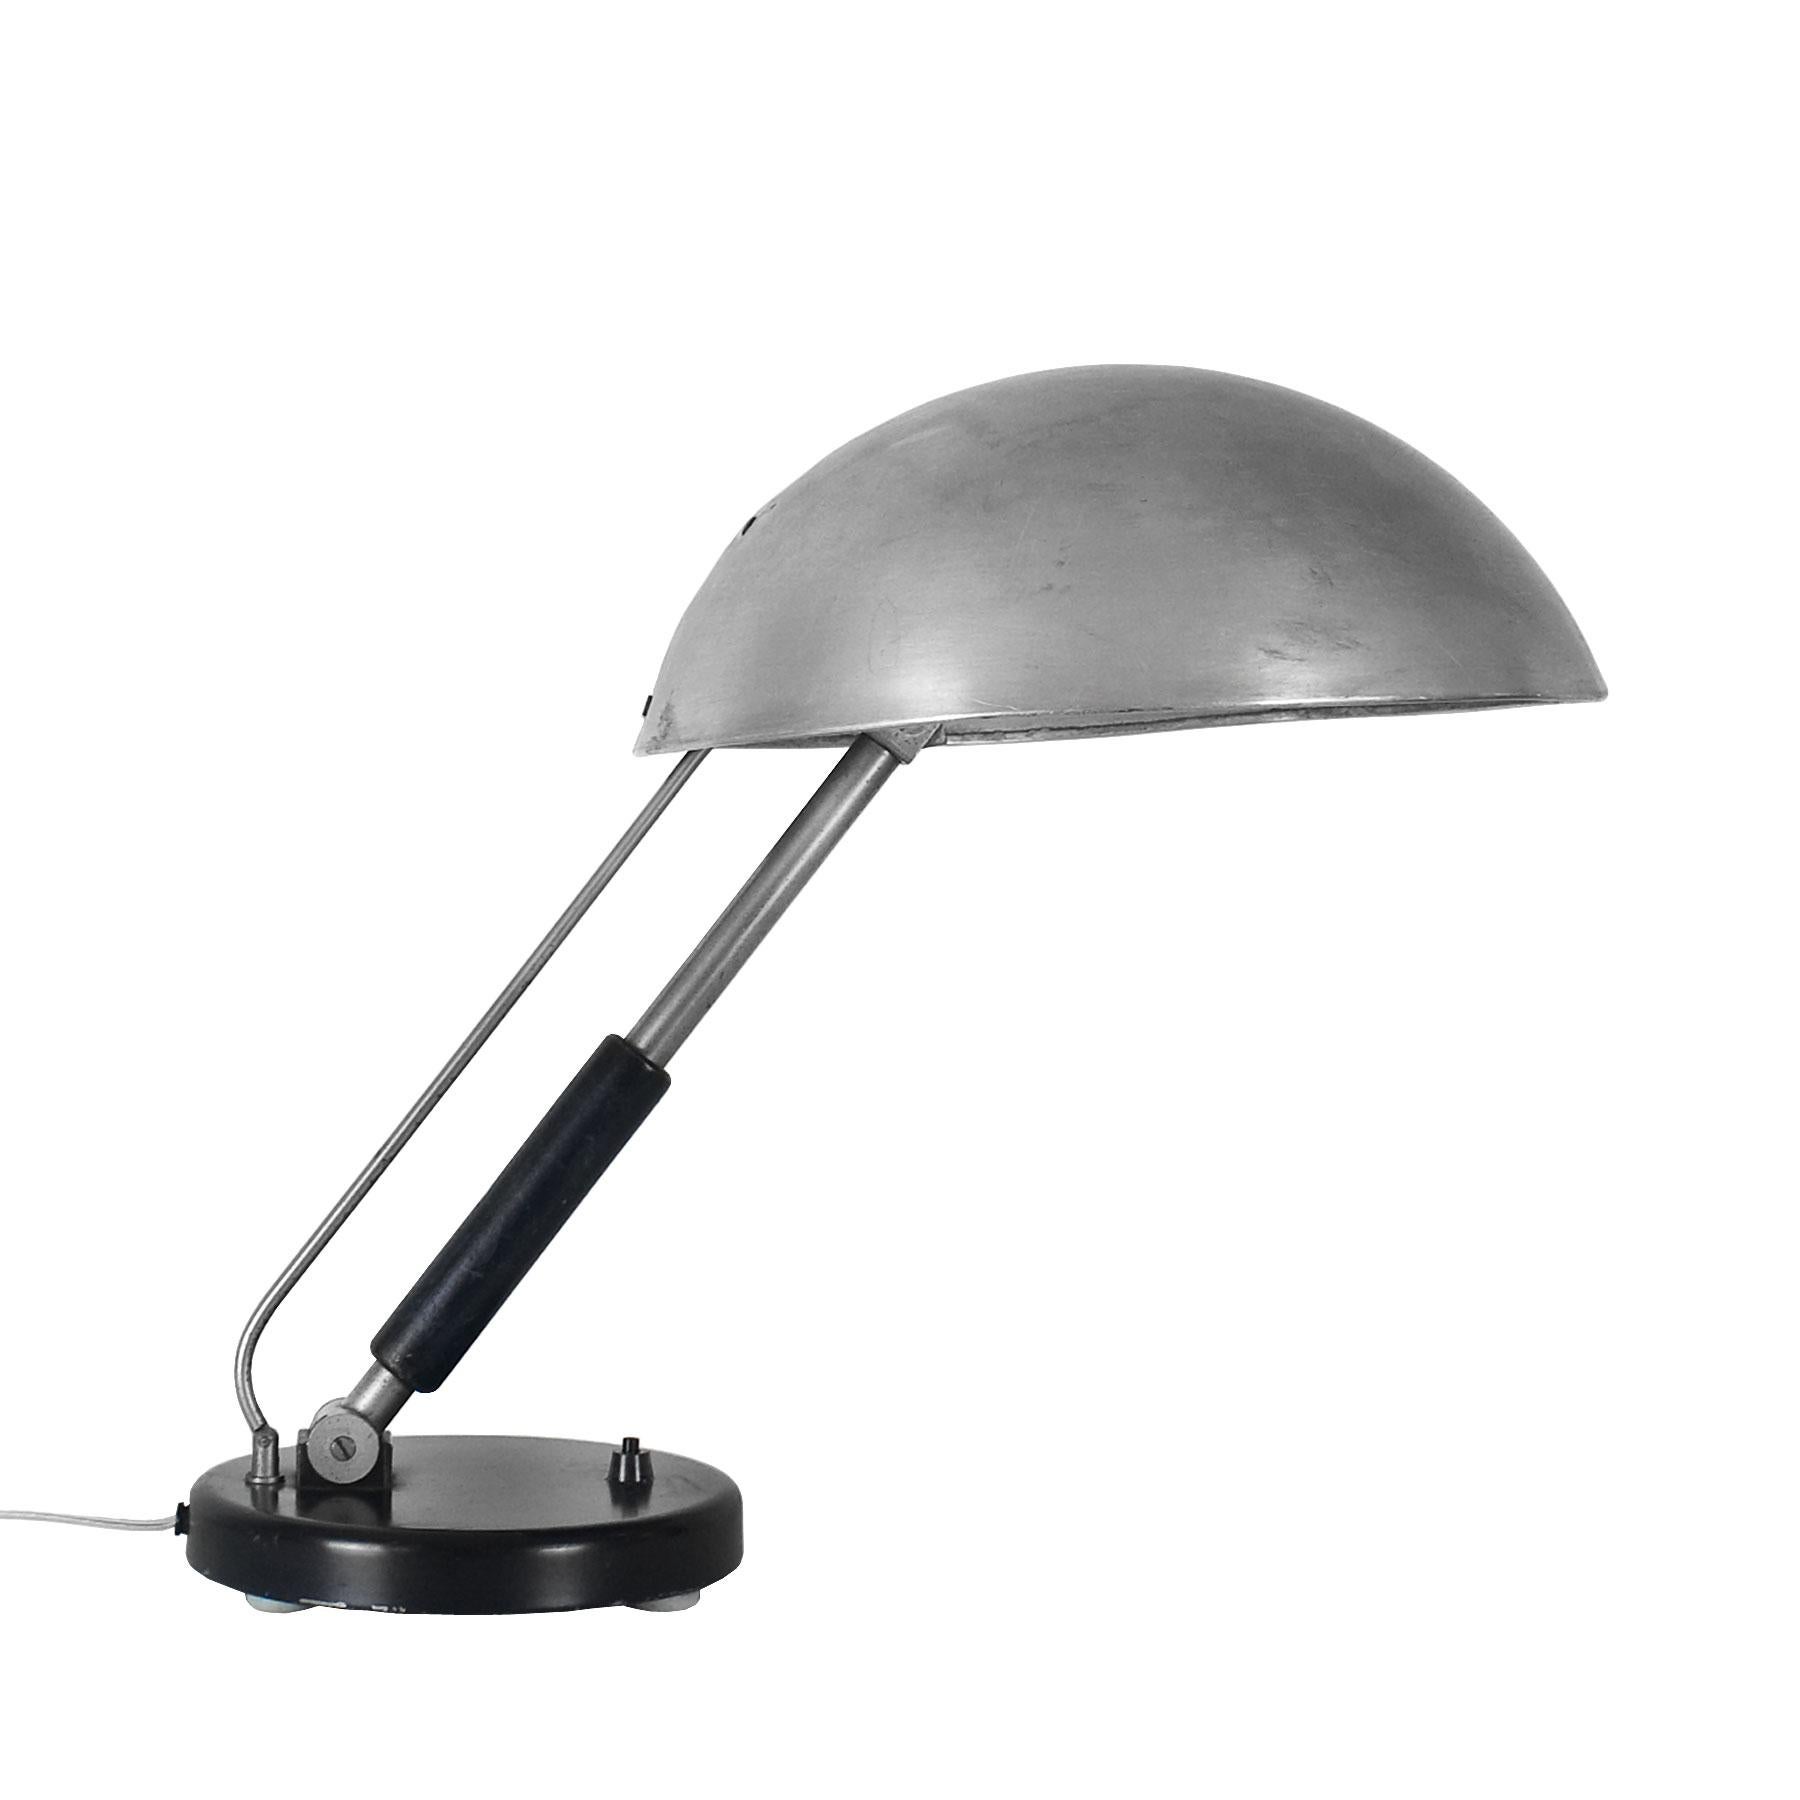 Bauhaus style desk lamp, steel and wood base and adjustable stand, aluminum lampshade.
Design: Karl Trabert.
Manufacturer: G. Schanzenbach.

Germany, circa 1930.